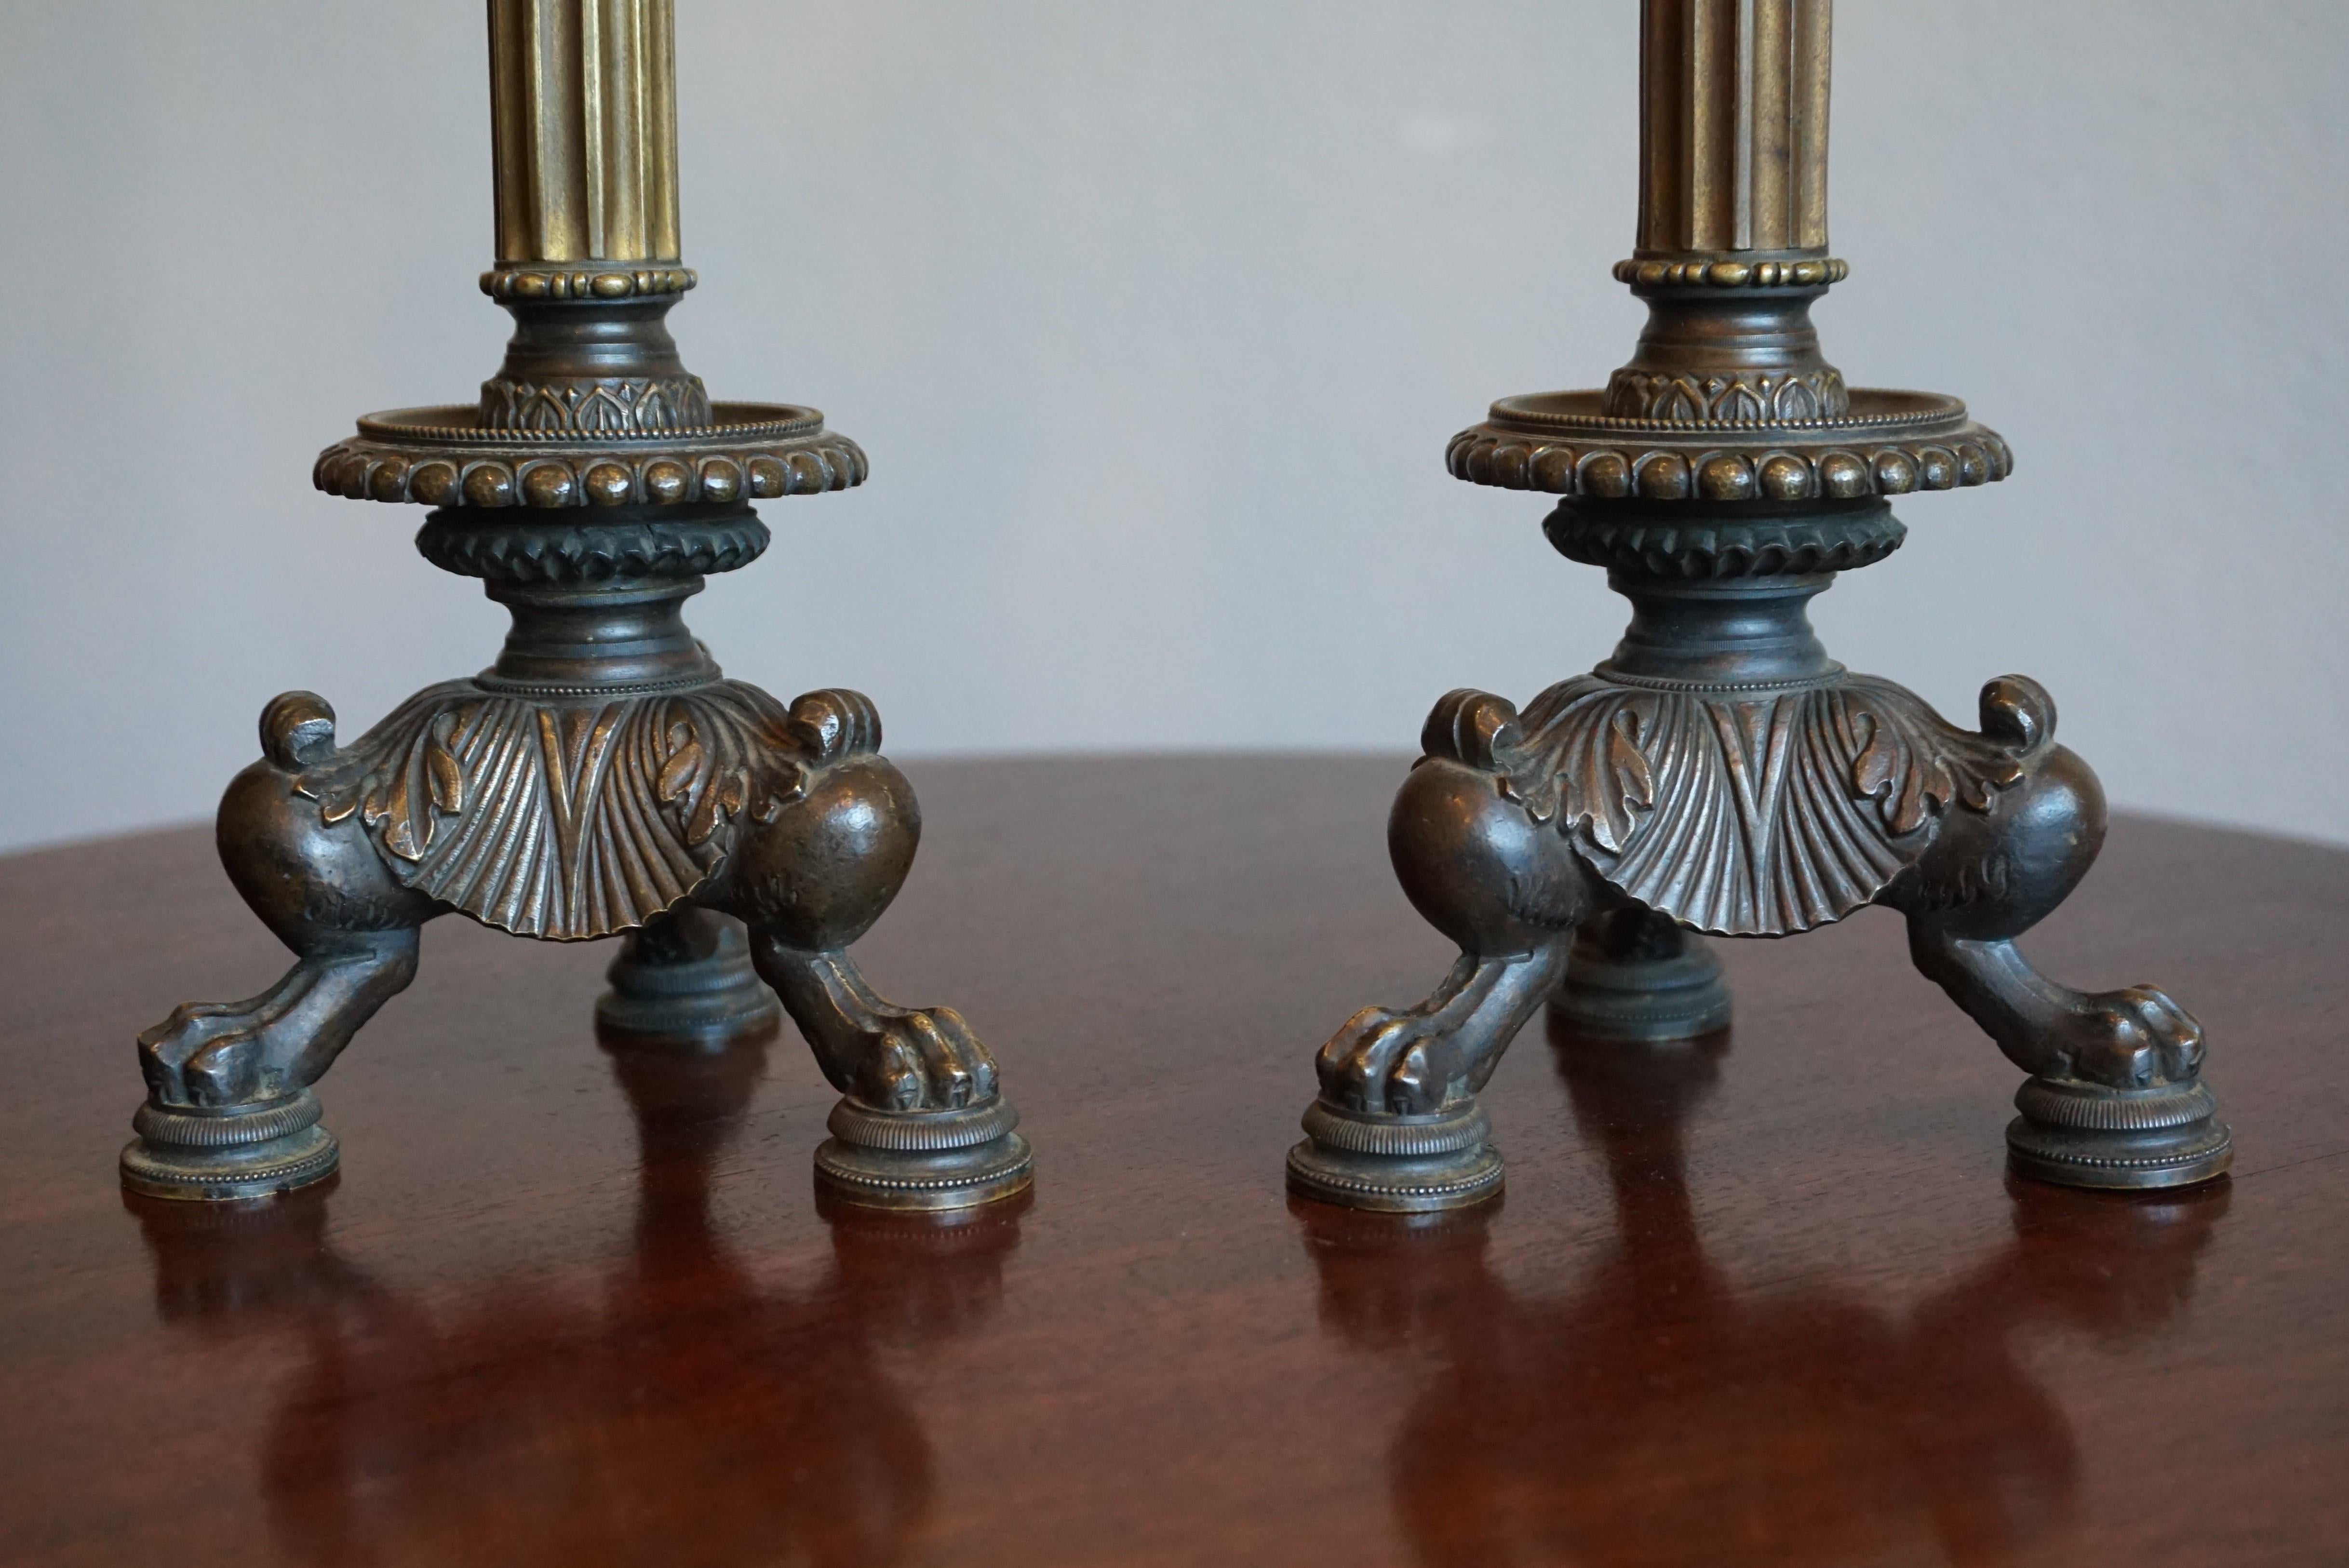 Great Pair of Antique 19th Century Bronze and Brass Empire Revival Candlesticks (Handgefertigt)